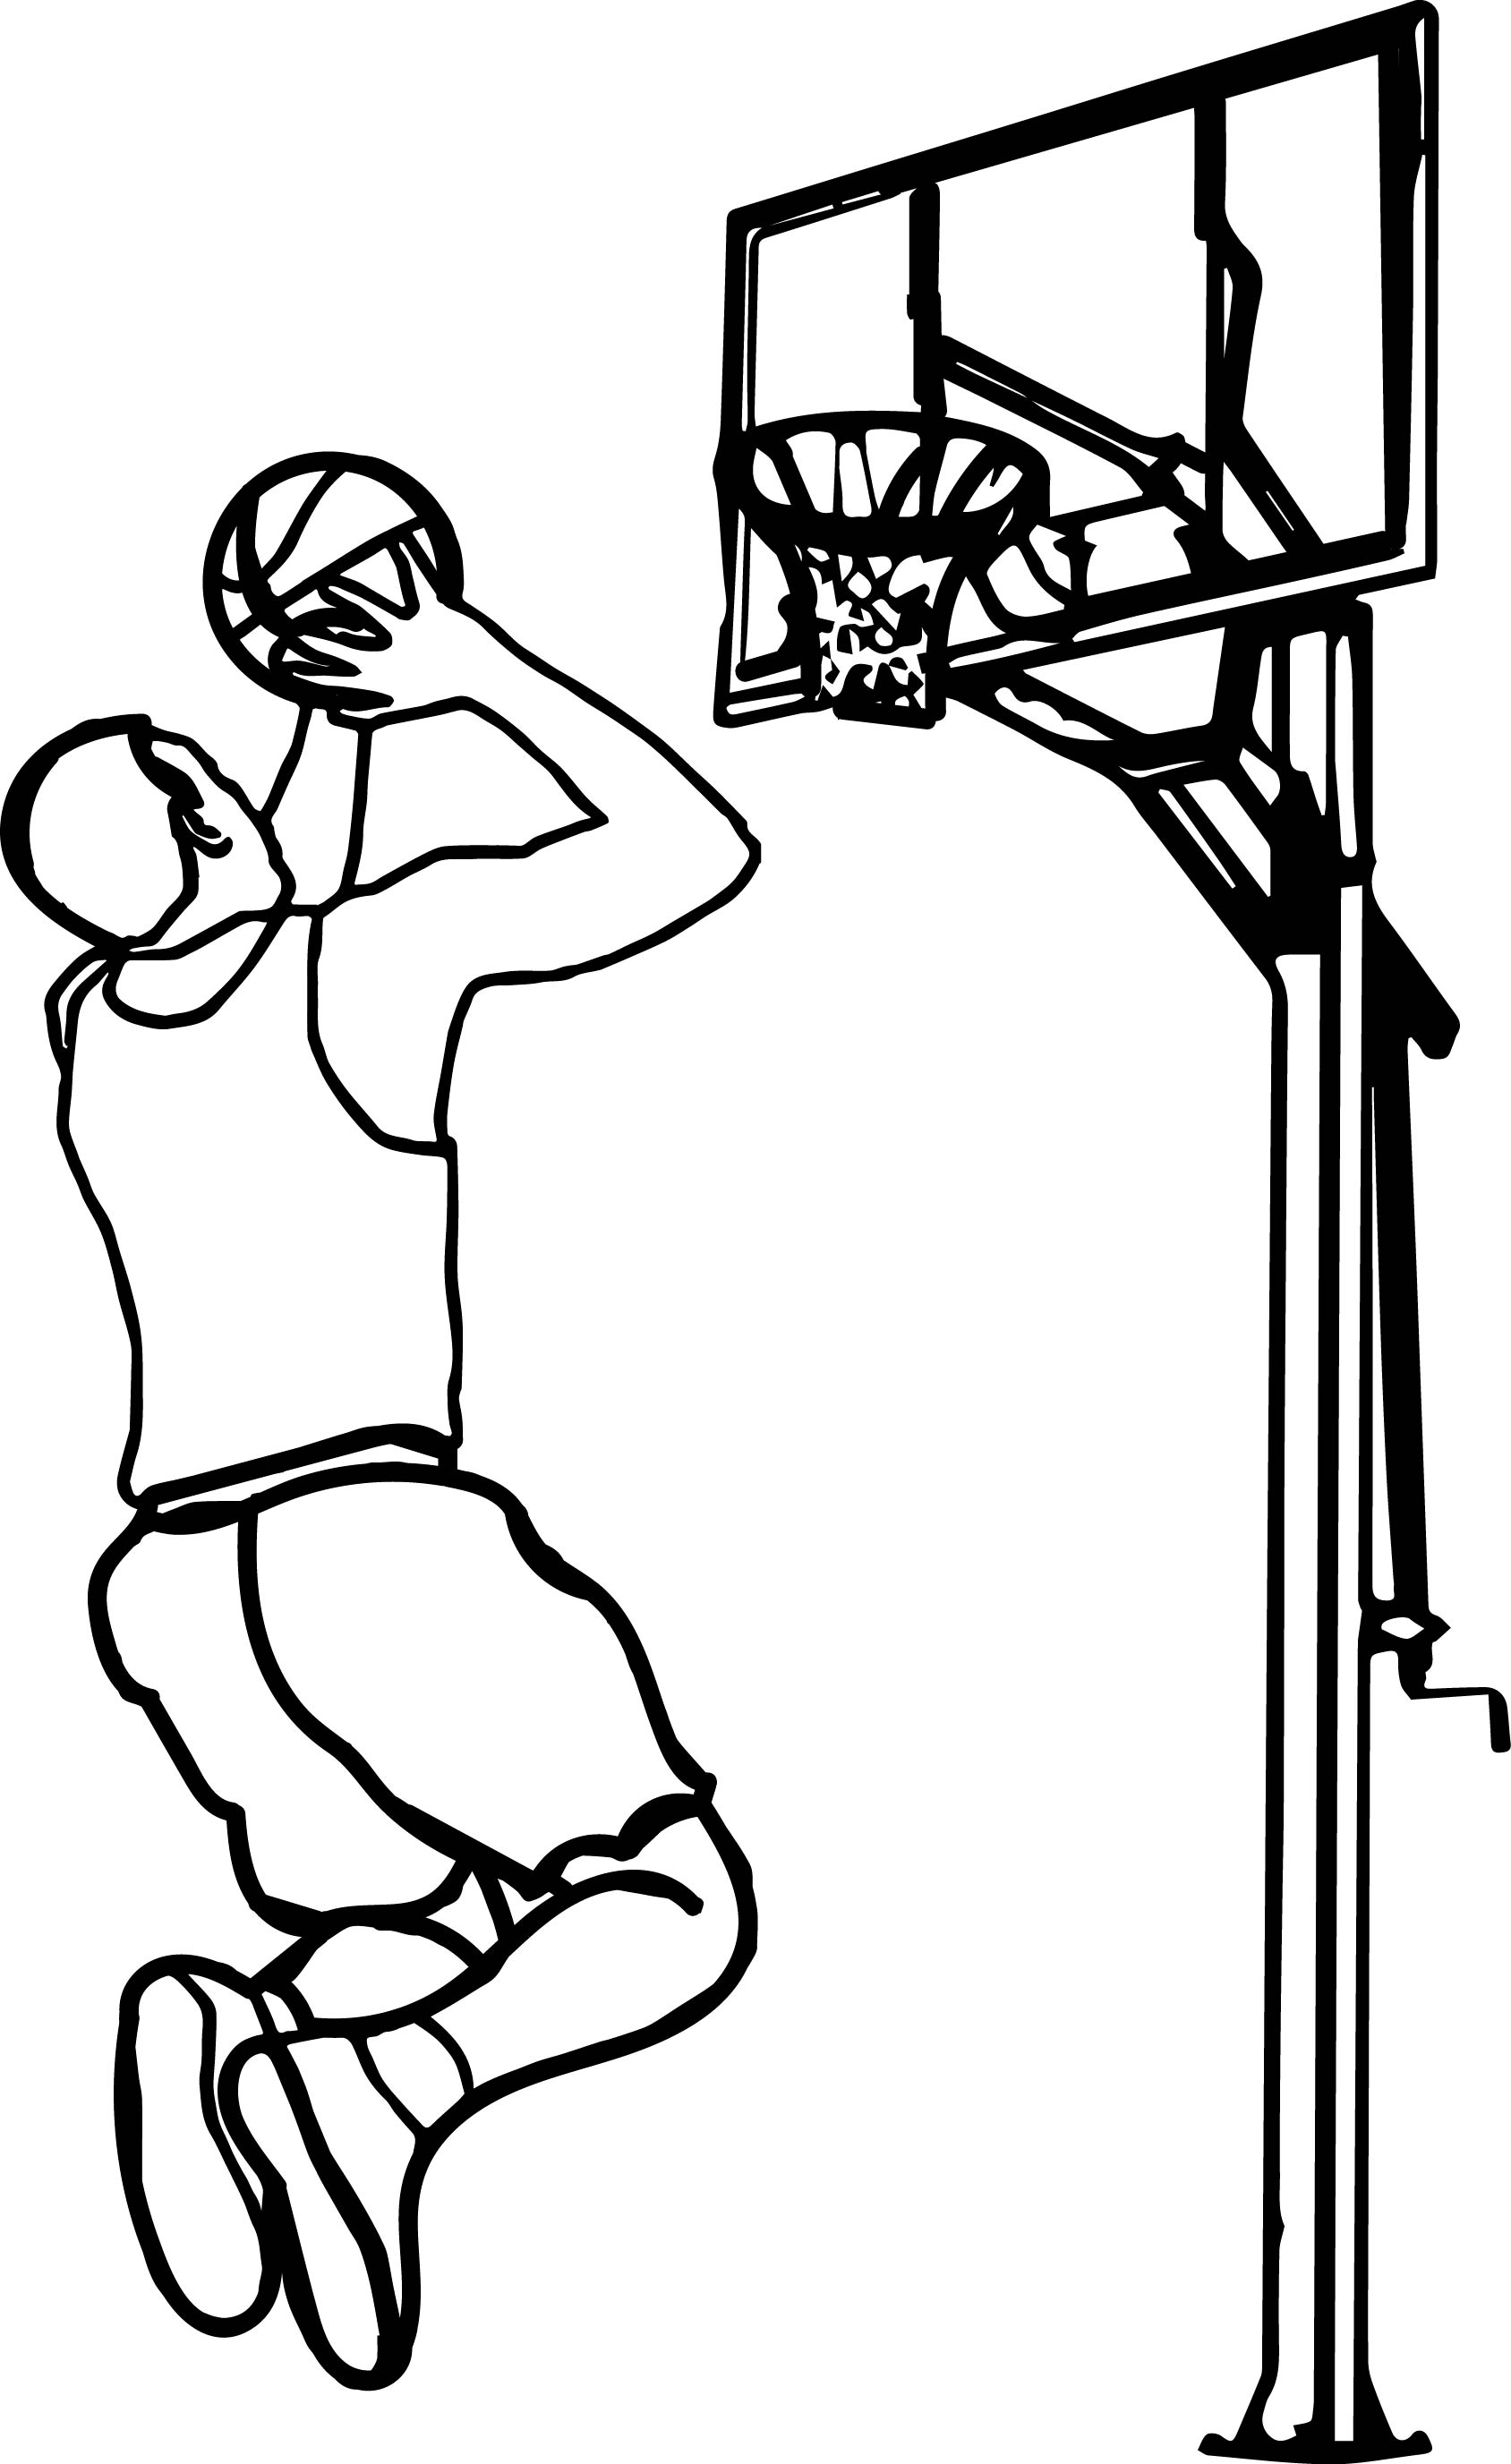 Basketball Hoop Coloring Page at Free printable